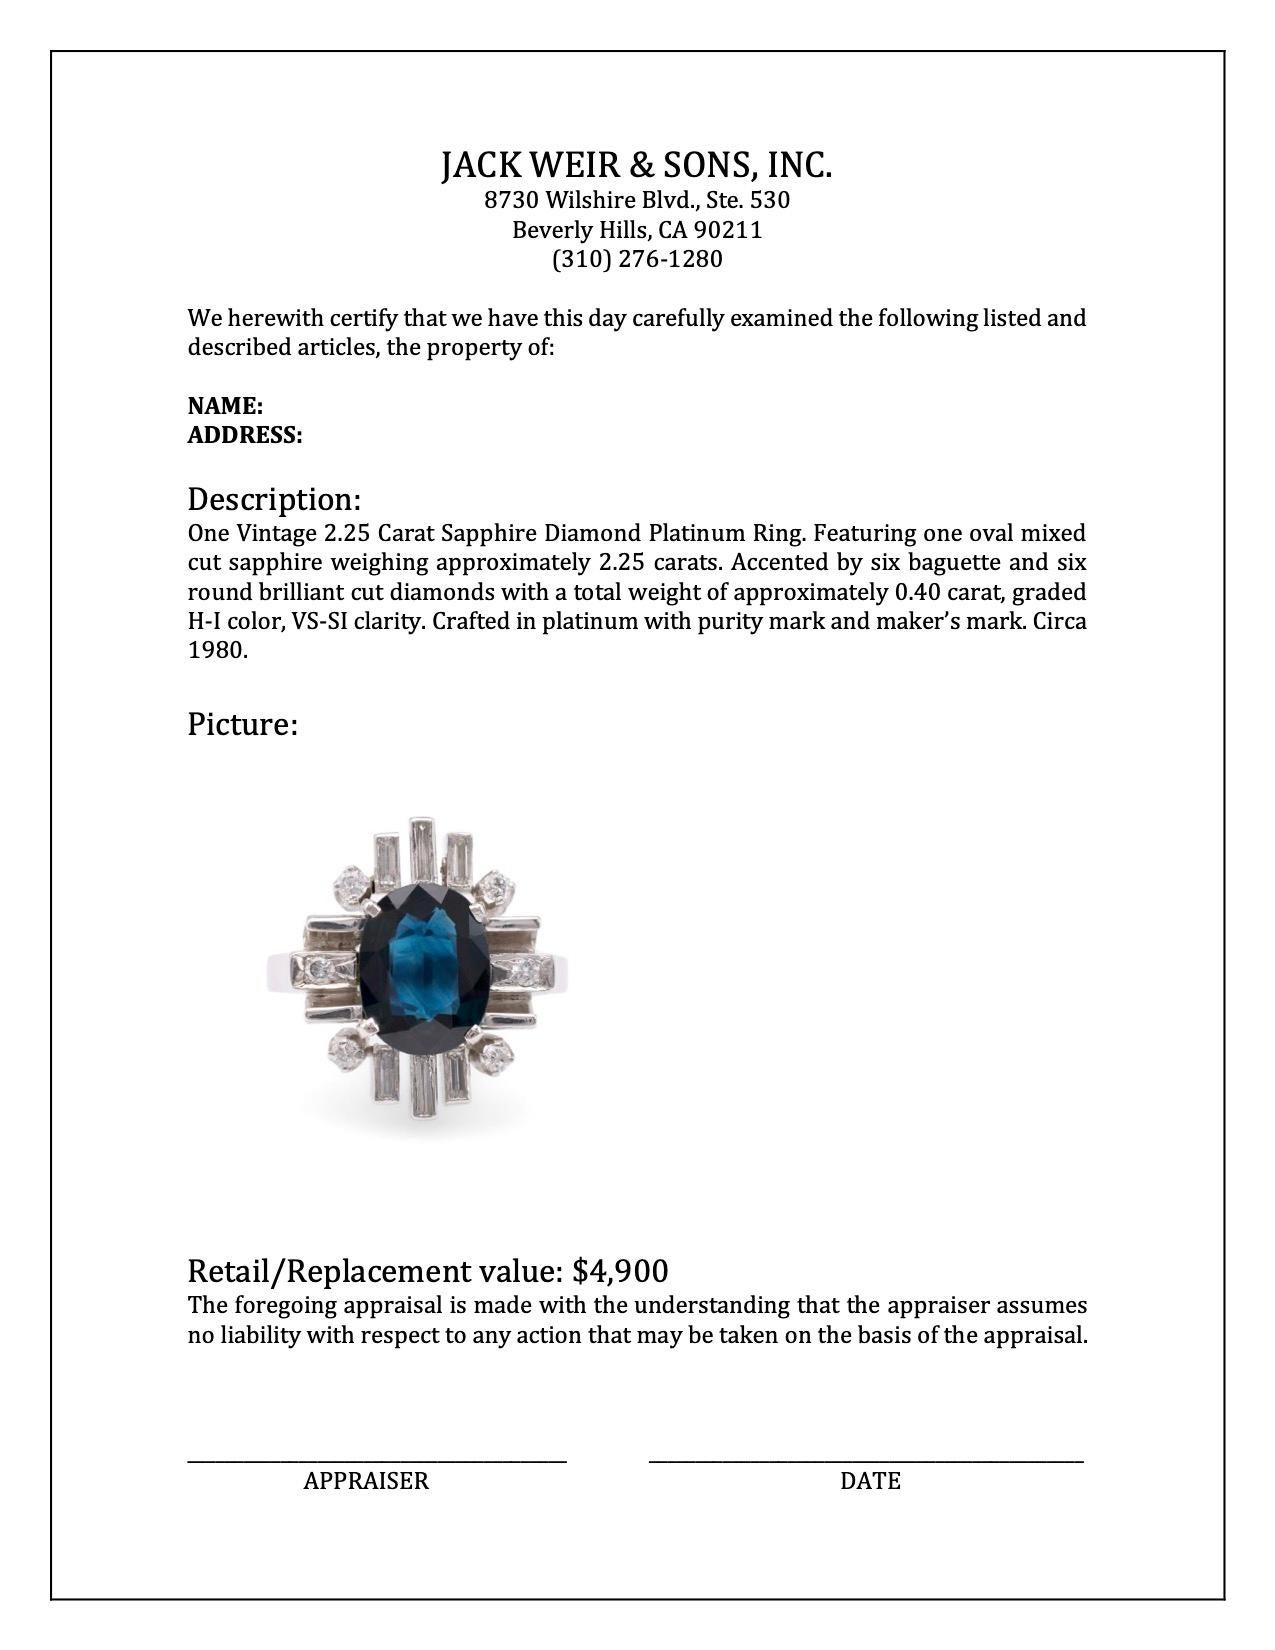 Women's or Men's Vintage 2.25 Carat Sapphire Diamond Platinum Ring For Sale